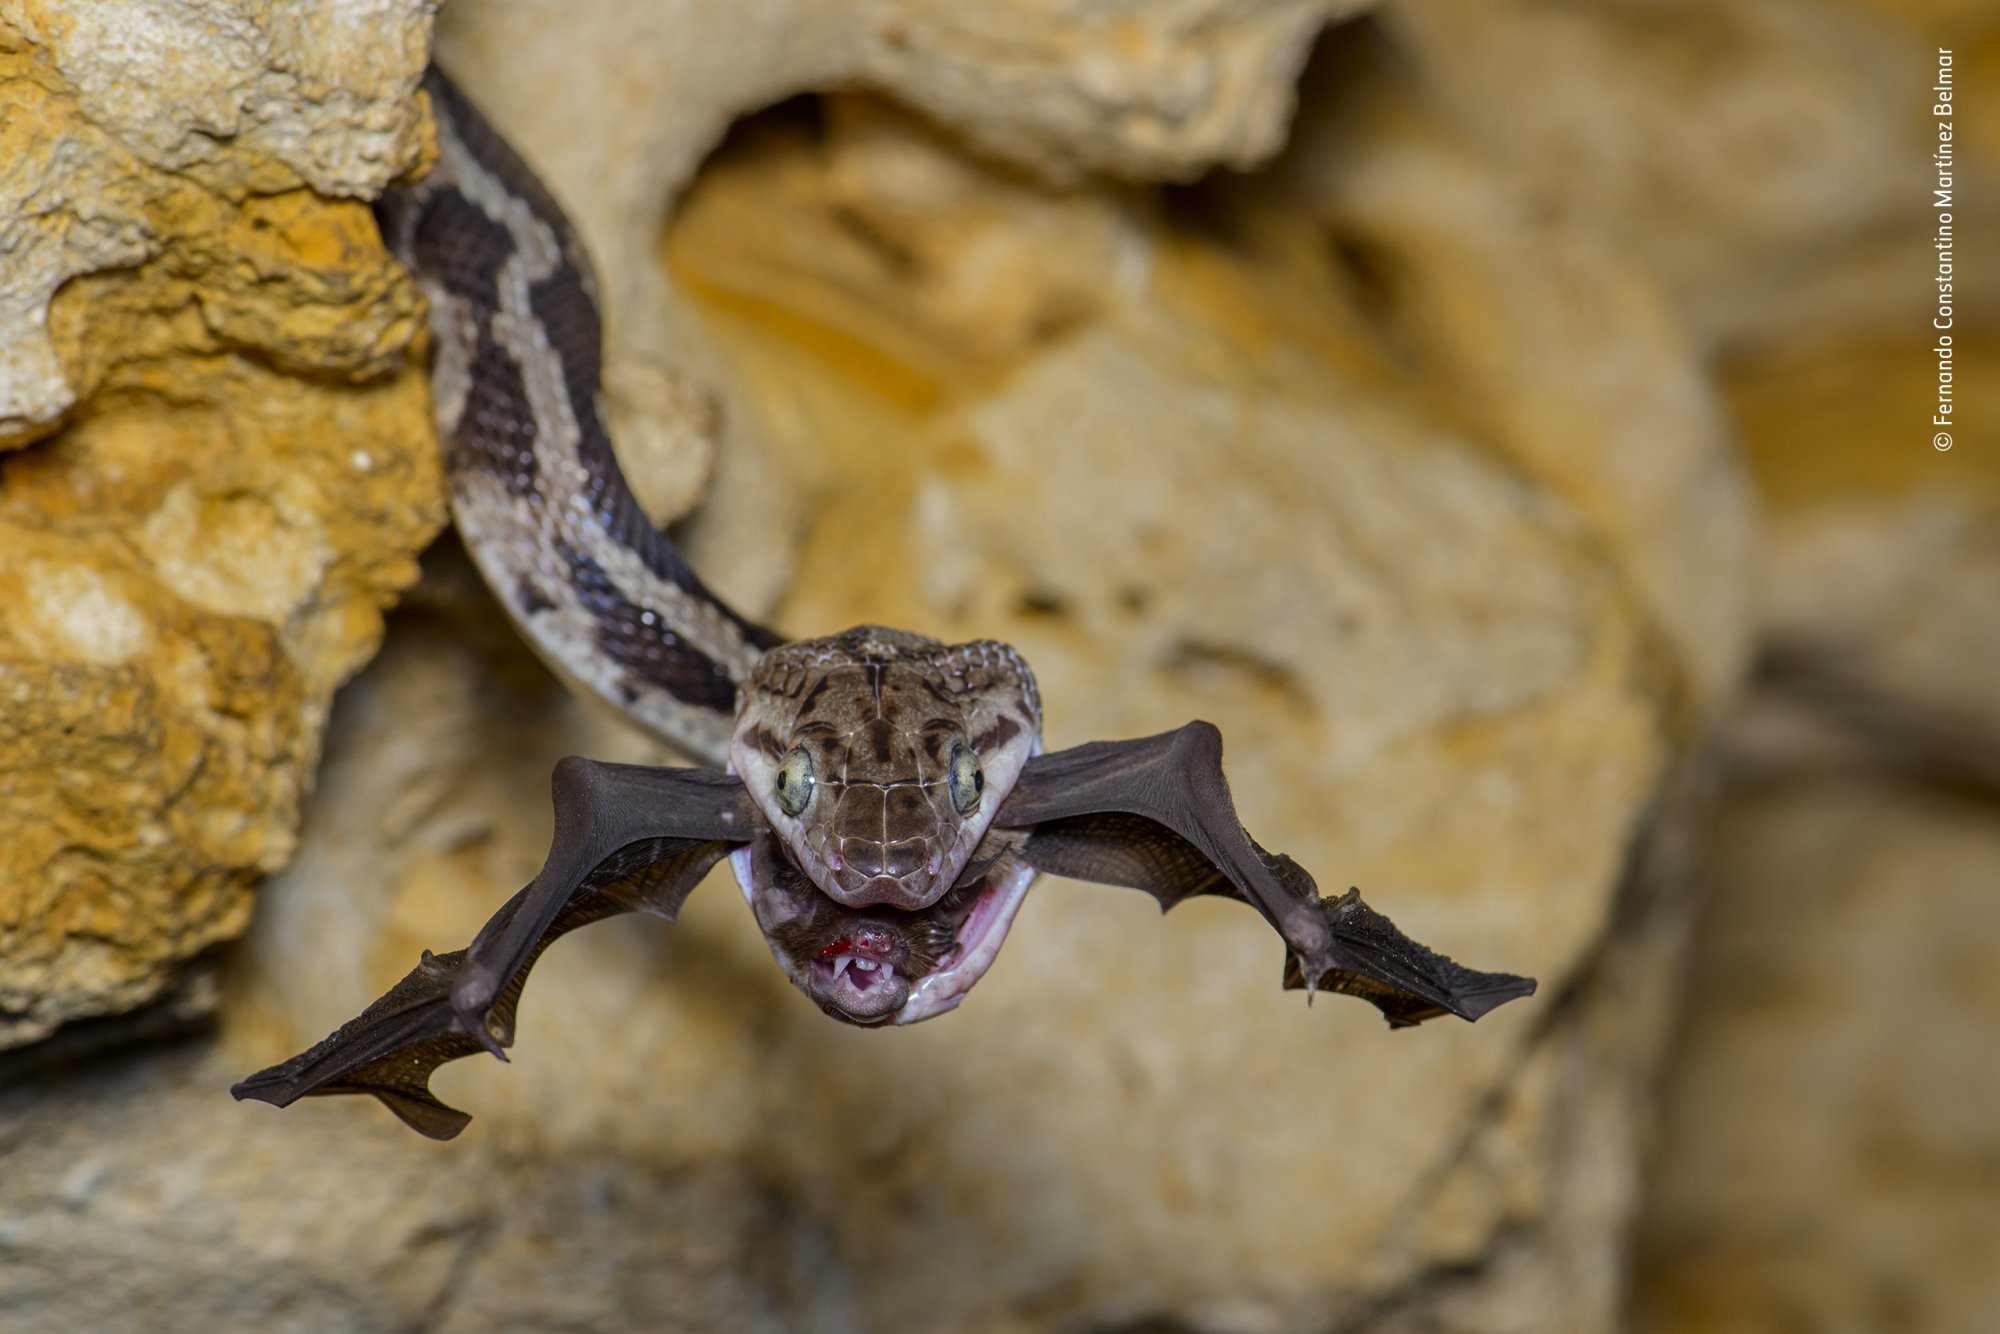 A Yucatan rat snake retreating into a crack with his bat prey.